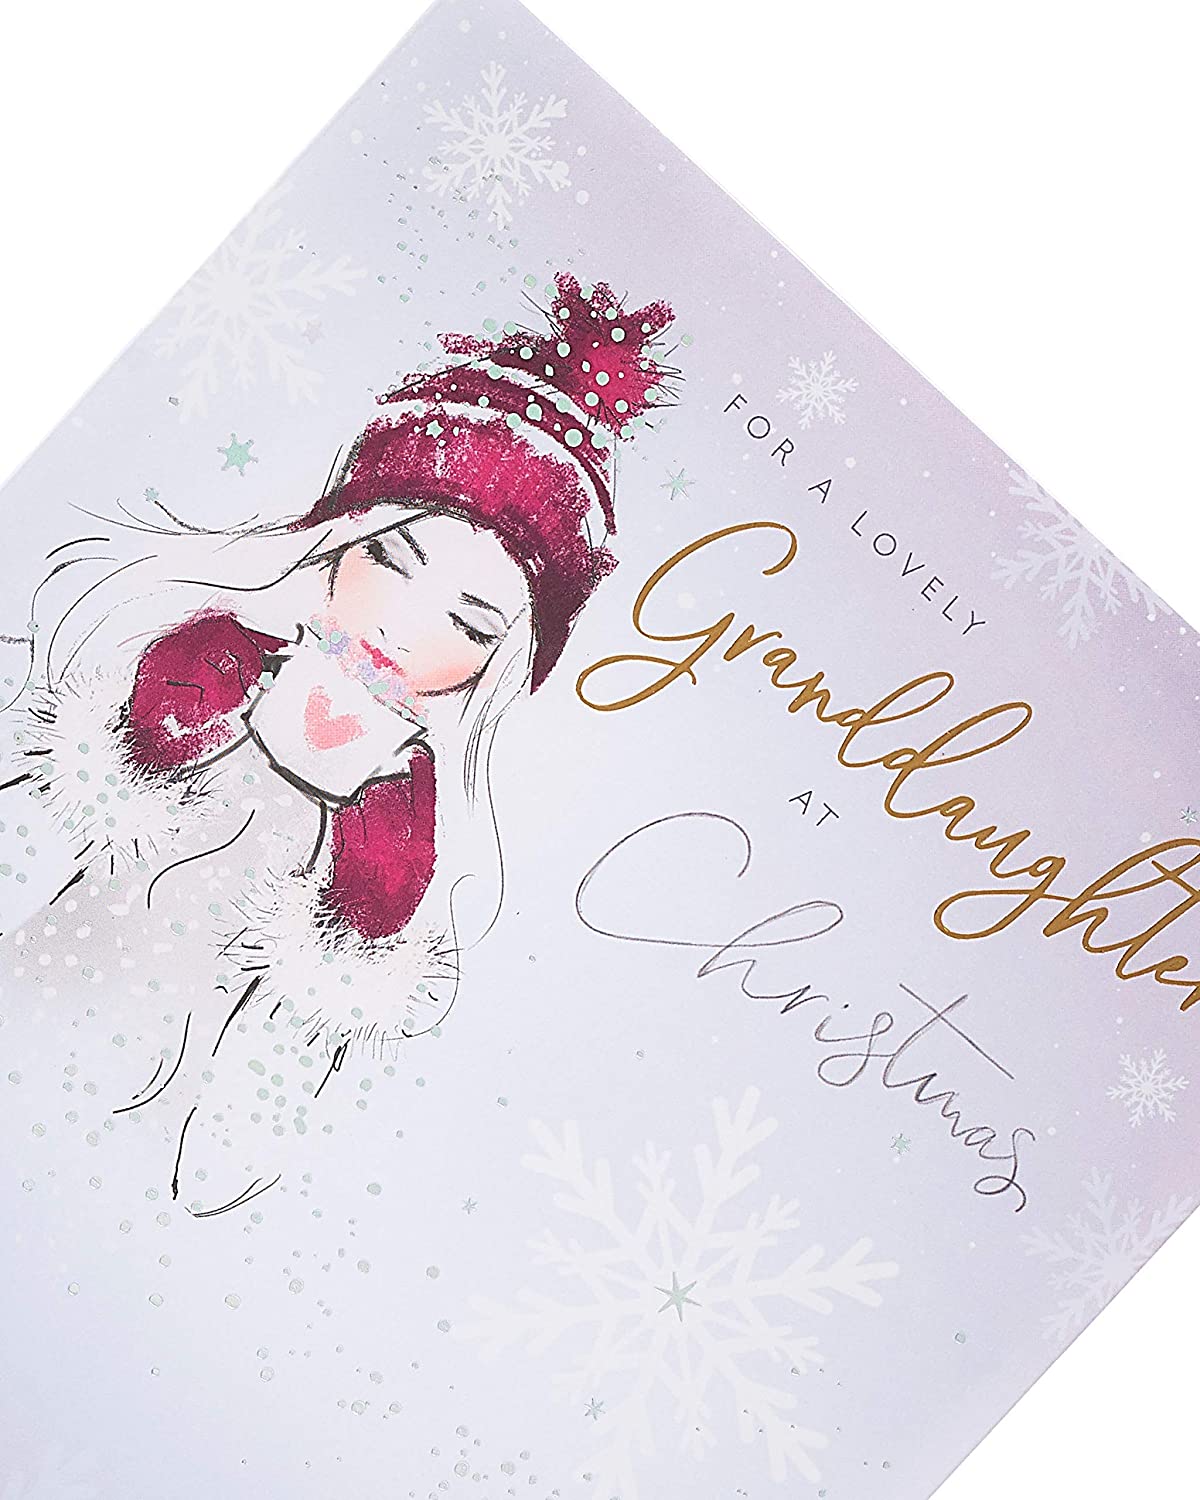 Christmas Card for Granddaughter Contemporary Design